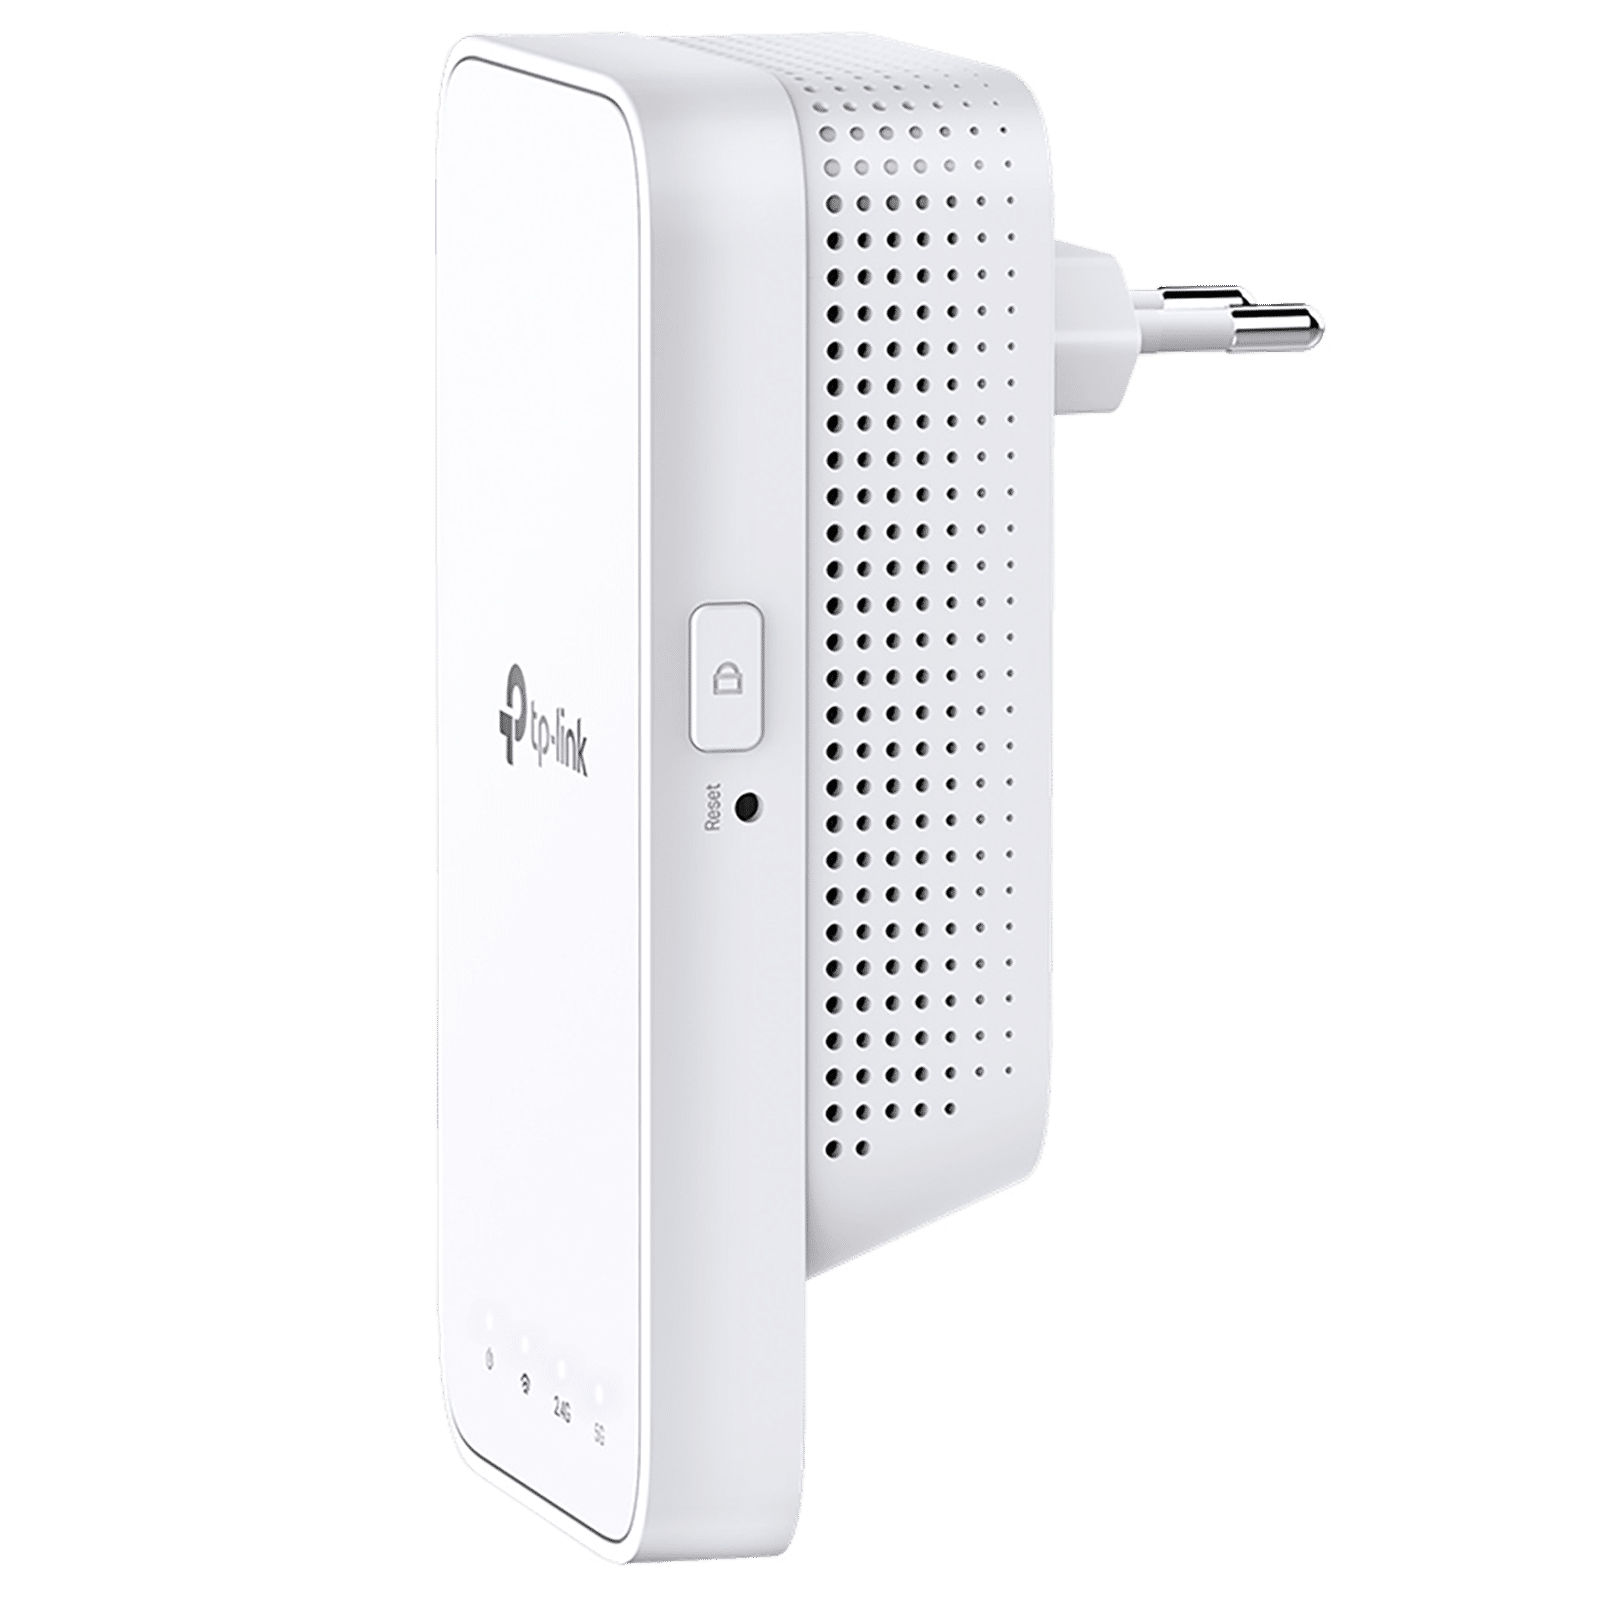 Buy RE300 AC1200 Dual Band Wi-Fi Range Extender (Smart Signal 153500393, White) -